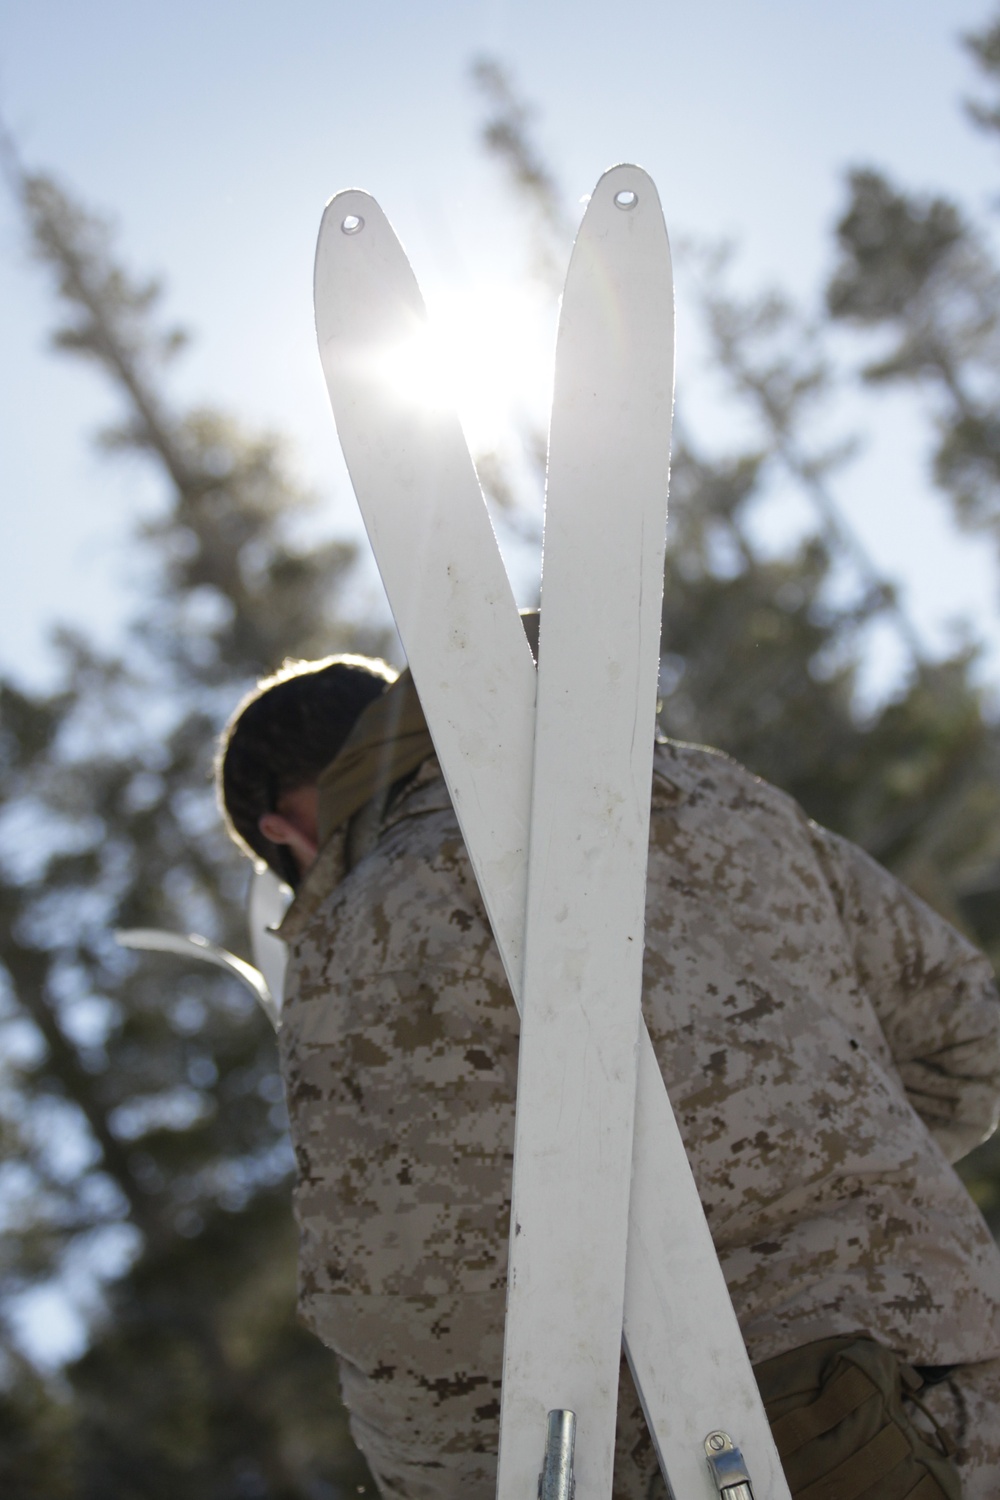 Mountain Leadership Course trains Marines to train Marines